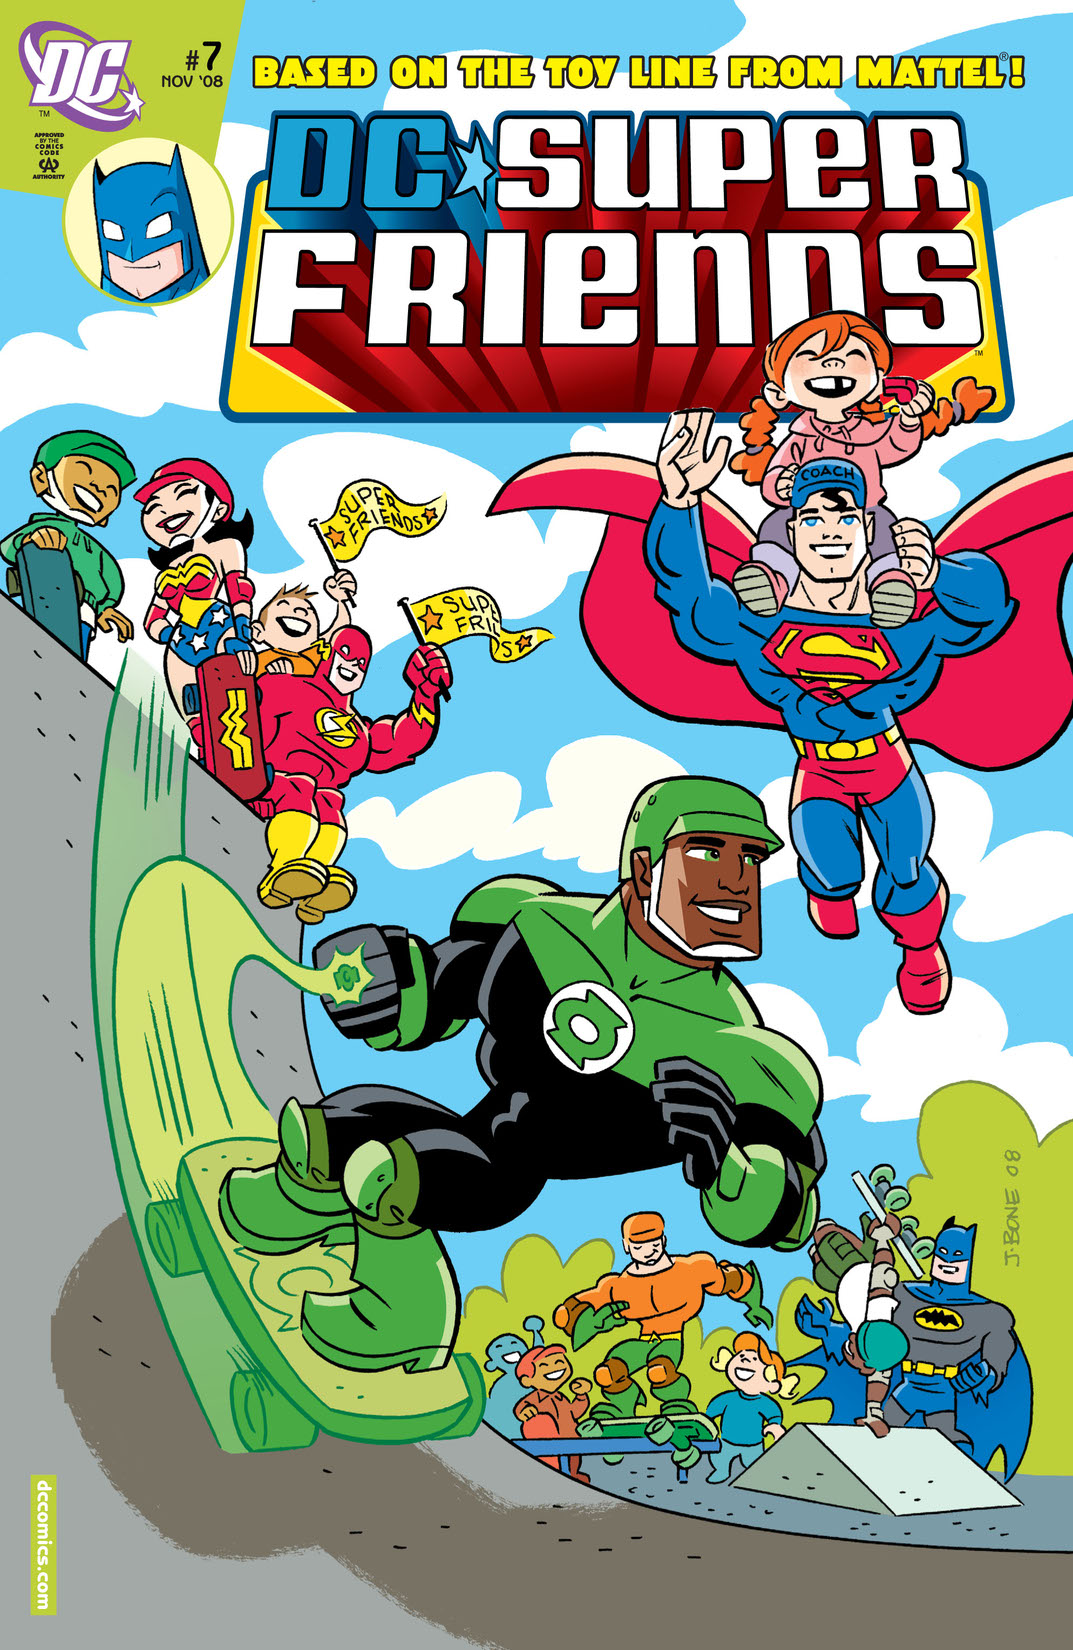 Super Friends (2008-) #7 preview images